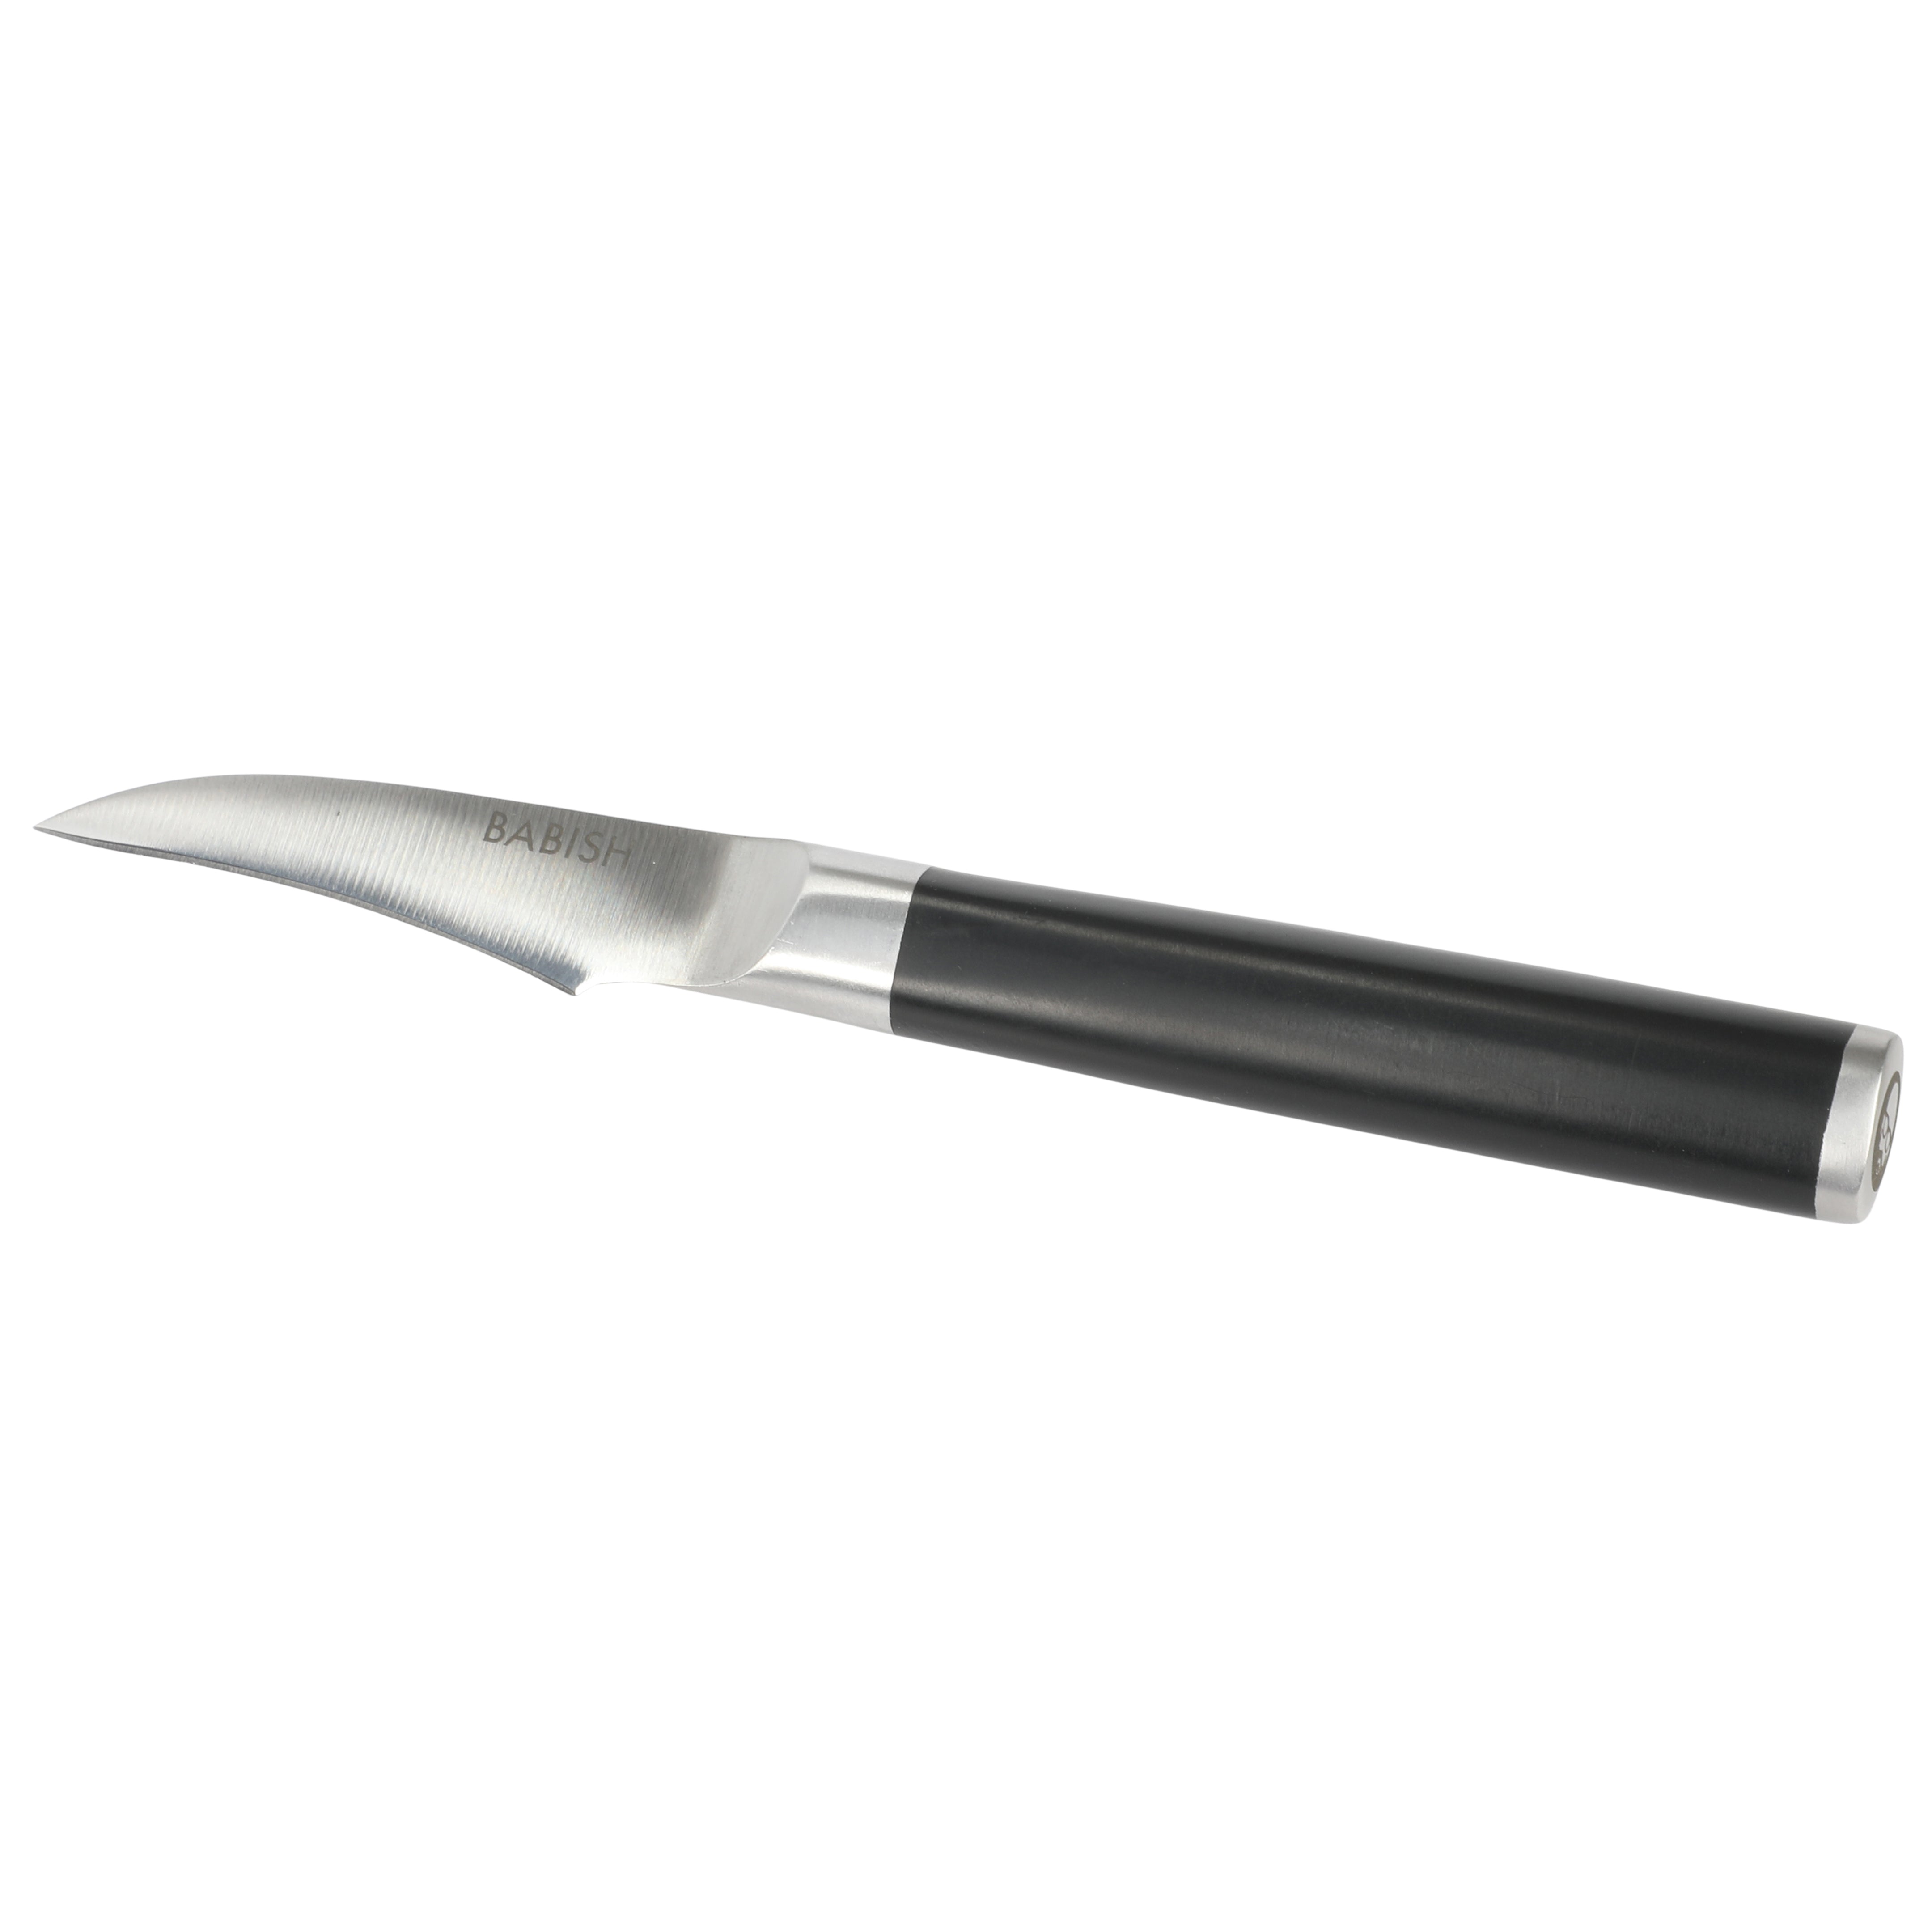  Babish German High-Carbon 1.4116 Steel Cutlery, 3-Piece w/Knife  Roll & High-Carbon 1.4116 German Steel Cutlery, 6.5 Santoku Knife: Home &  Kitchen